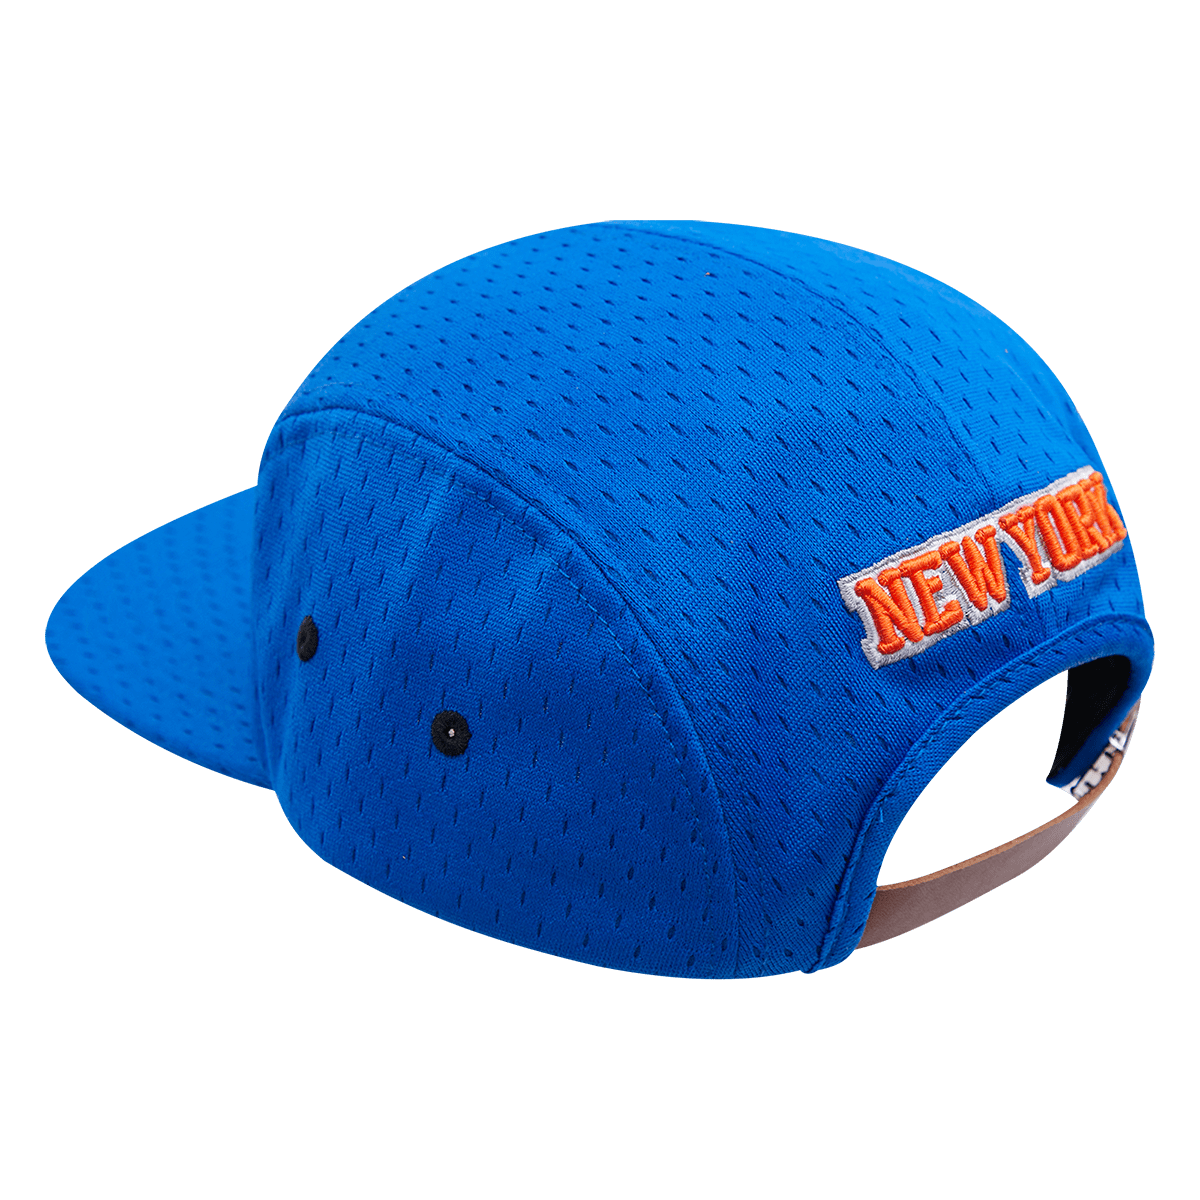 NEW YORK KNICKS LOGO MESH 5 PANEL HAT (ROYAL BLUE) – Pro Standard